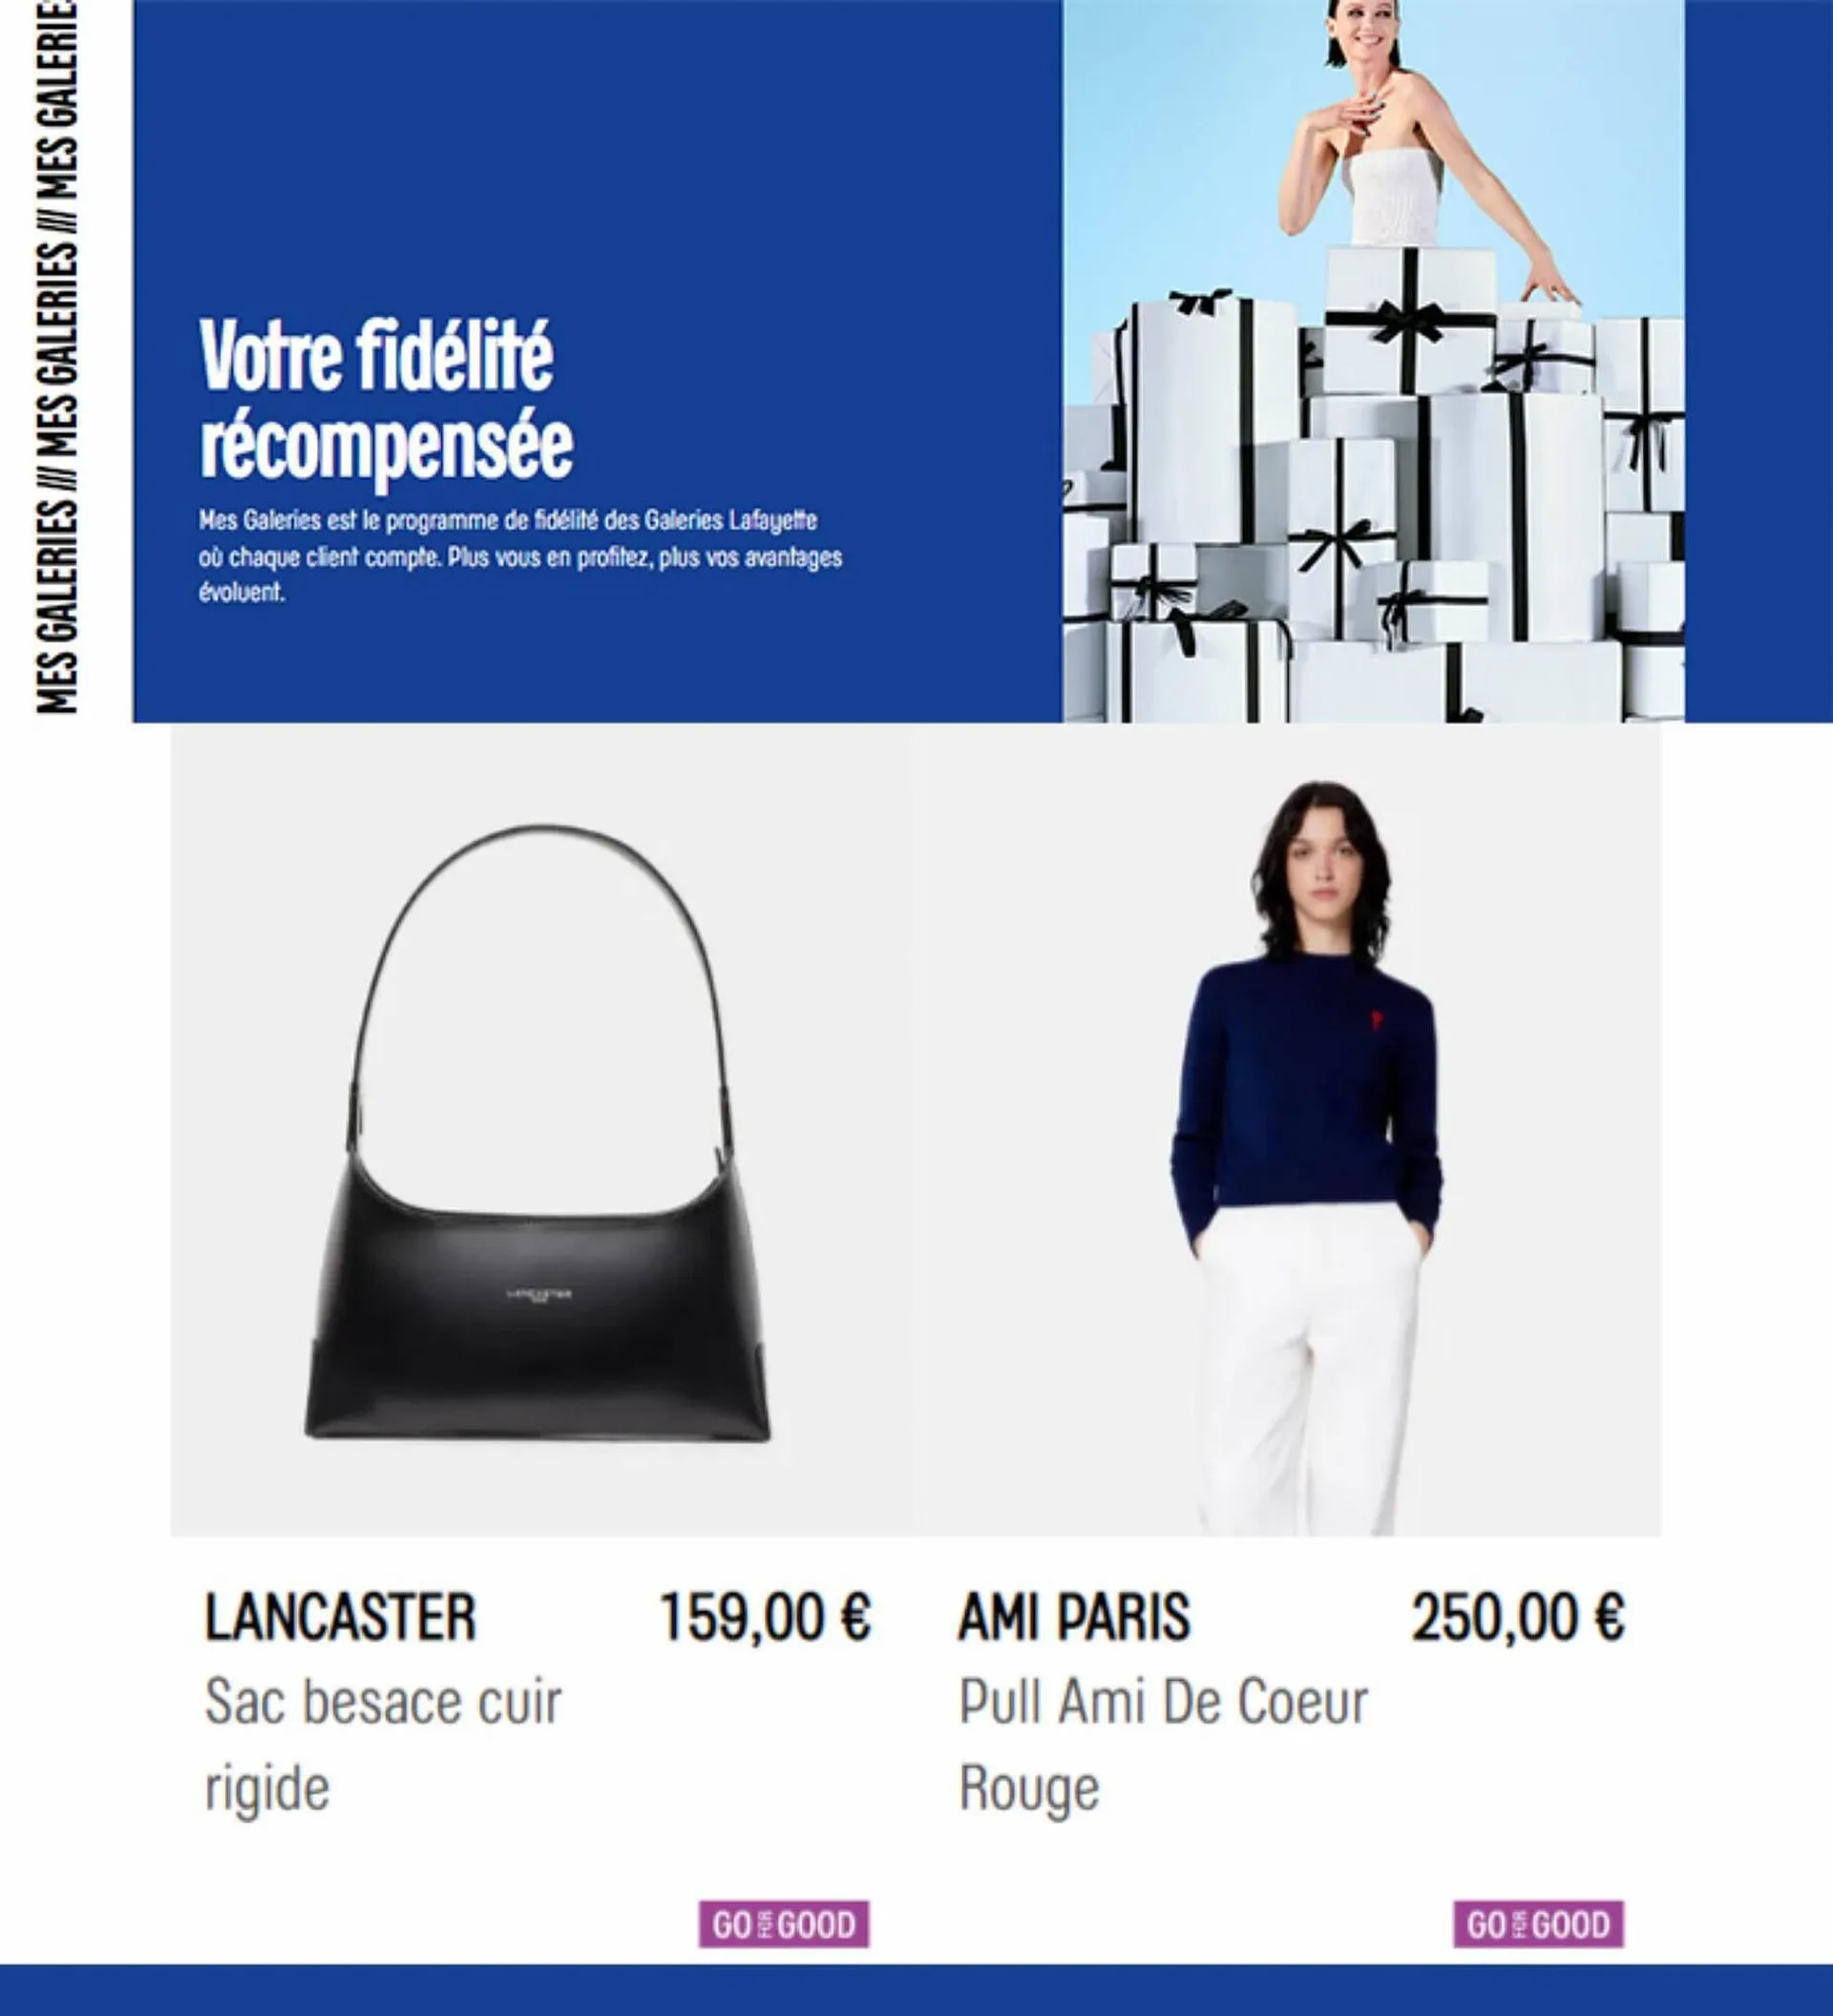 Catalogue Galeries Lafayette - 2